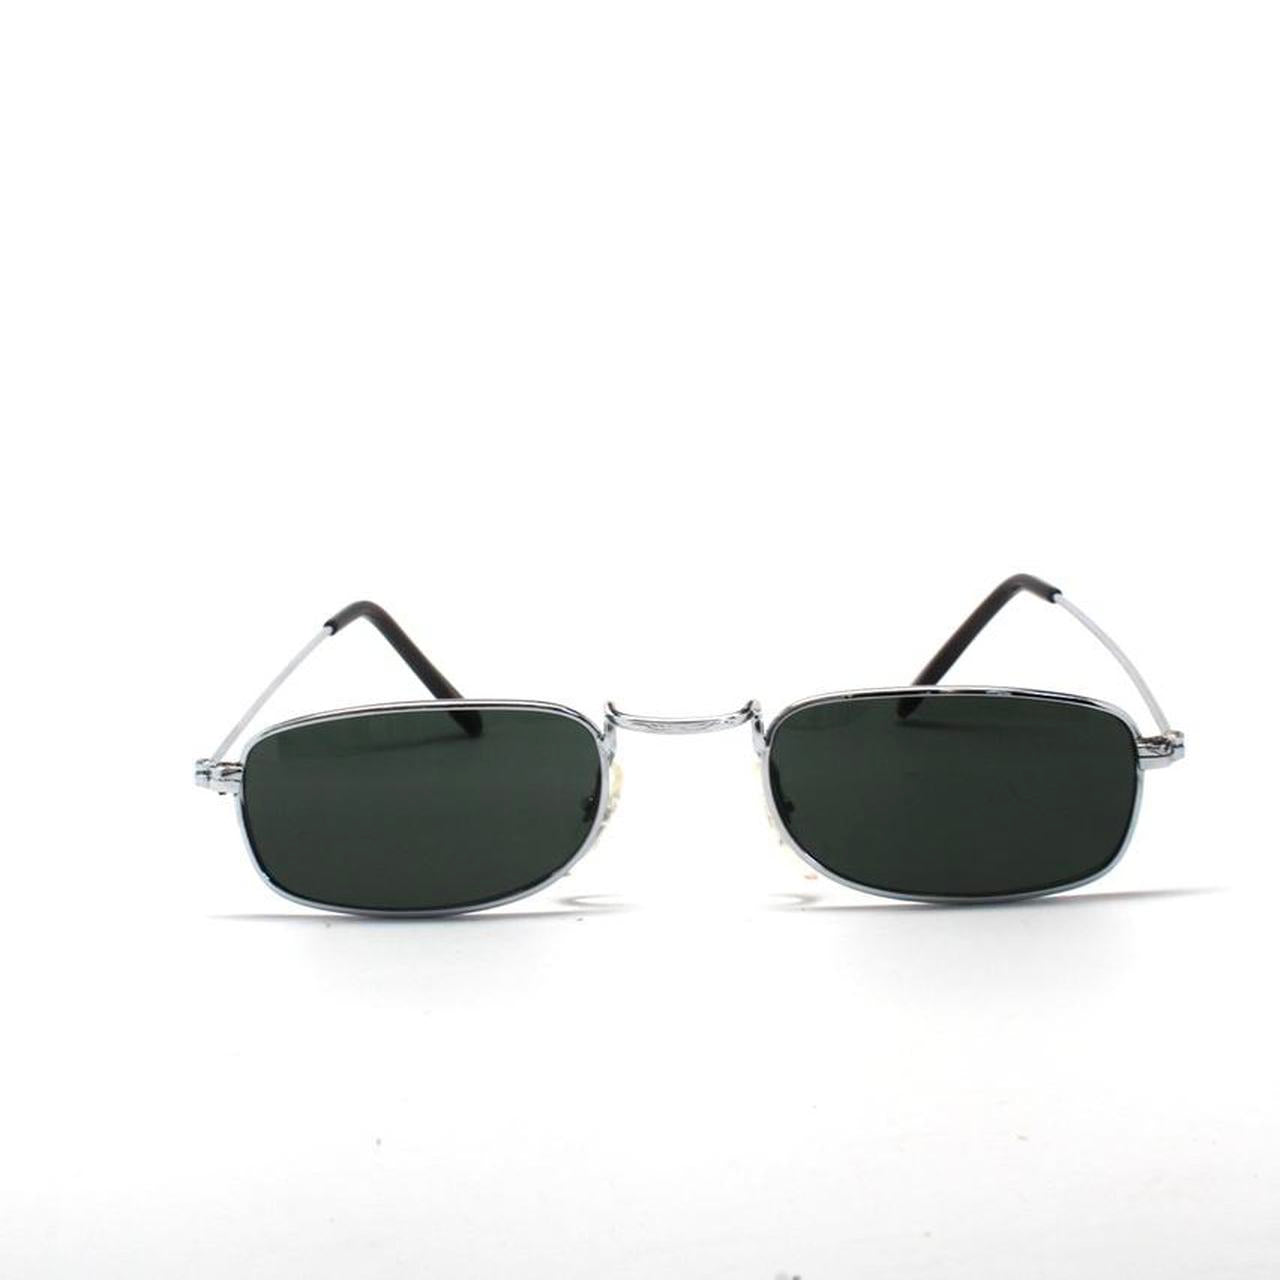 Vintage Small Size 1997 Rectangular Narrow Frame Sunglasses - Silver